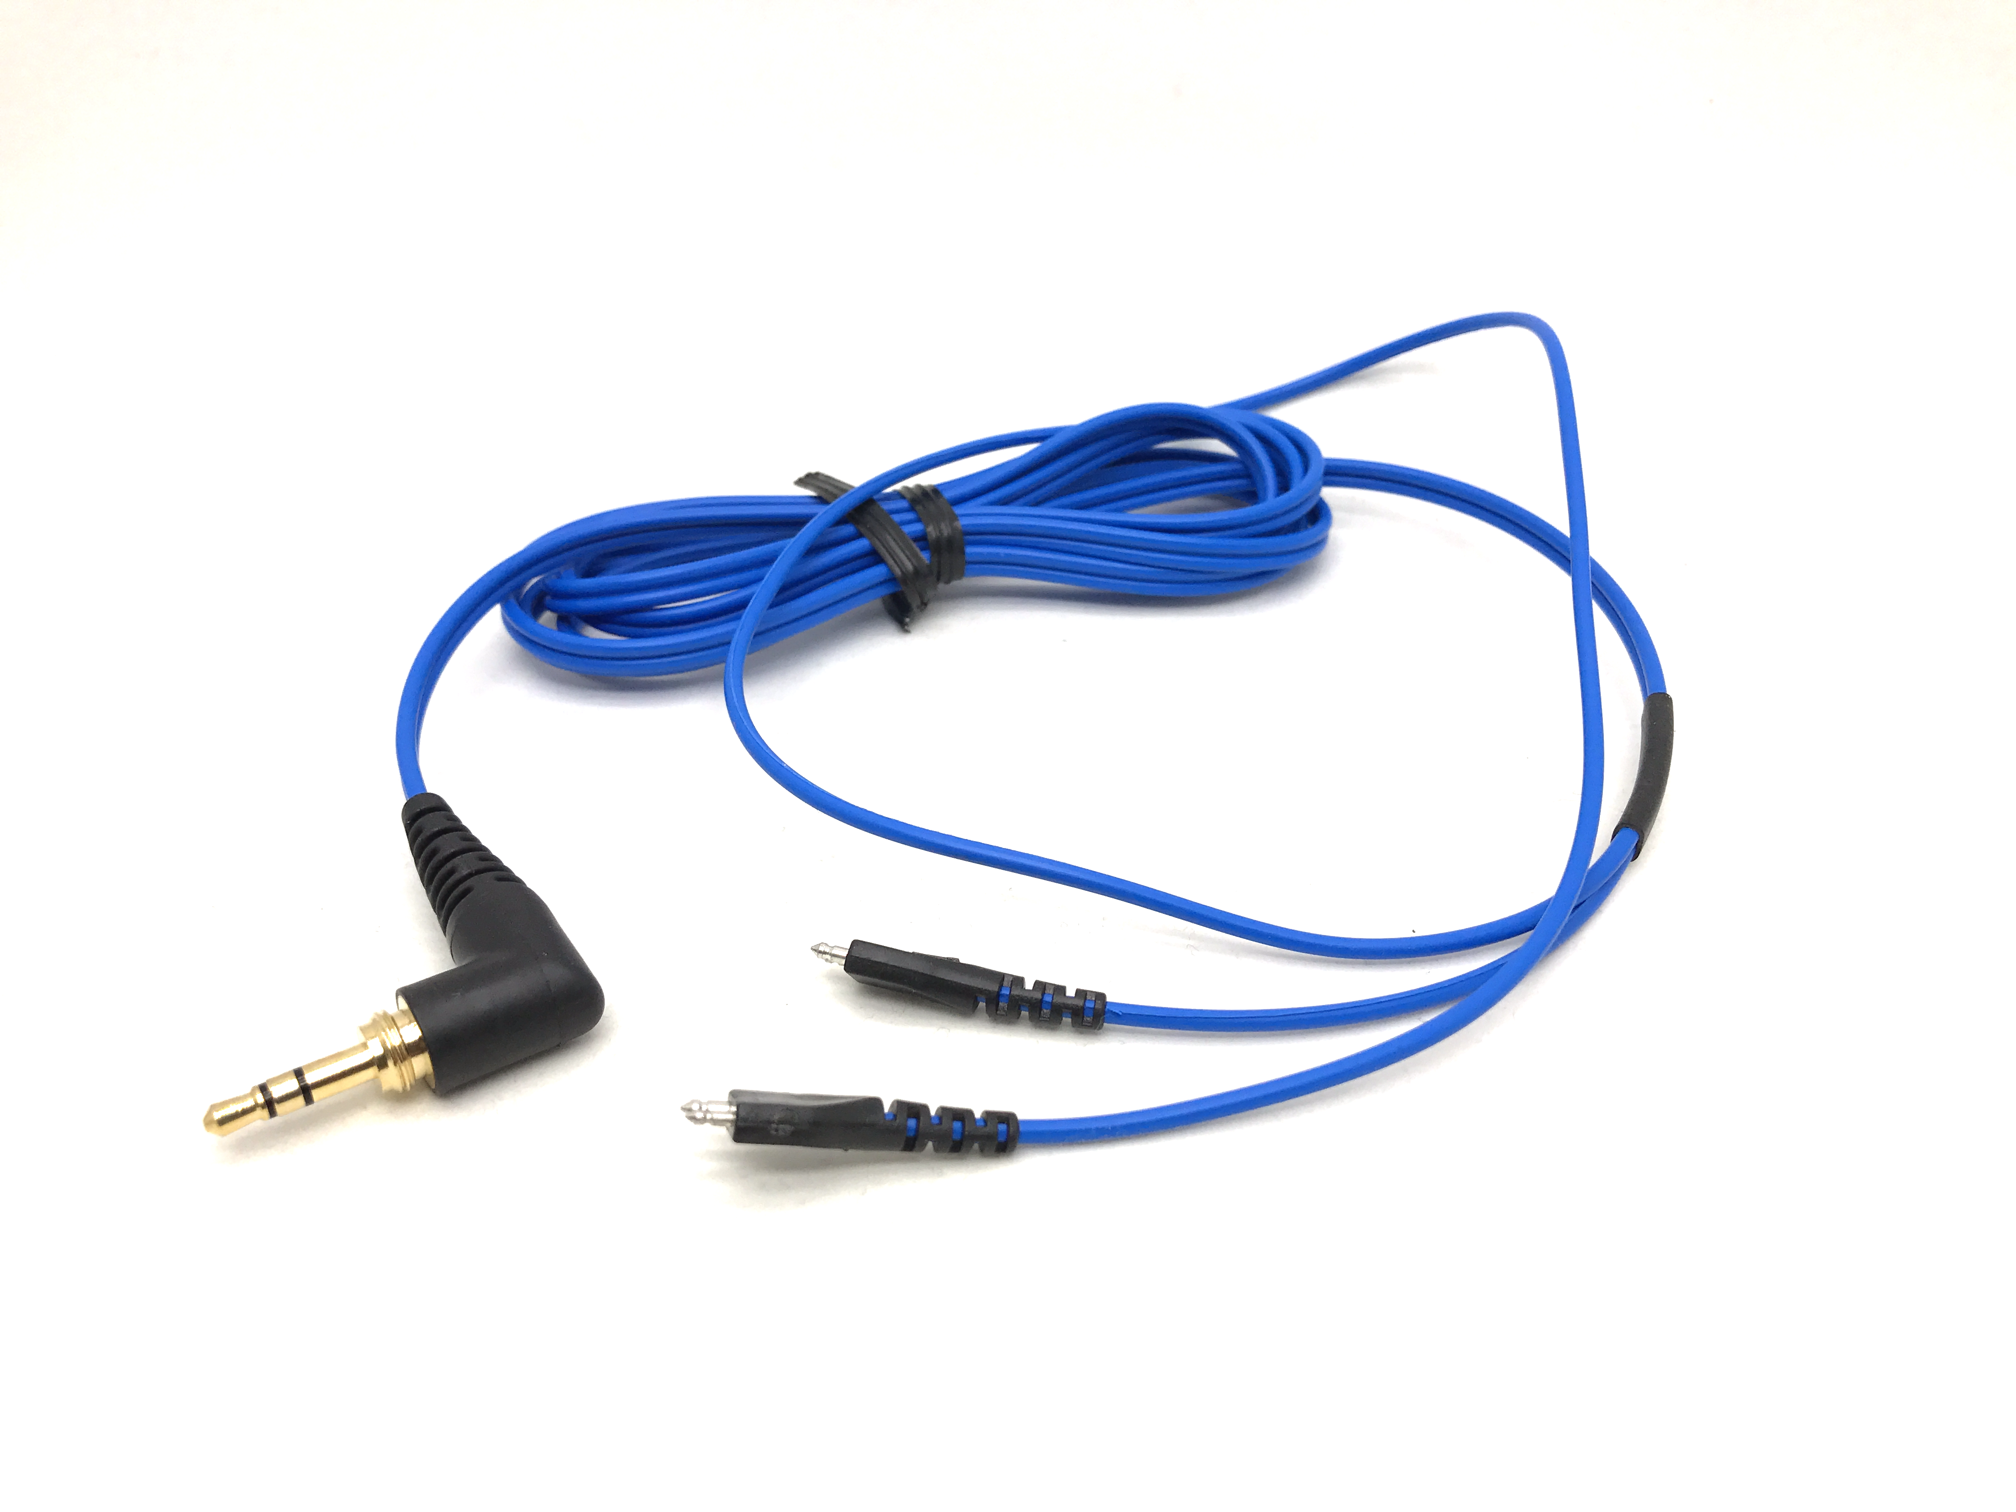 Sennheiser cable 1,5m, blue edition